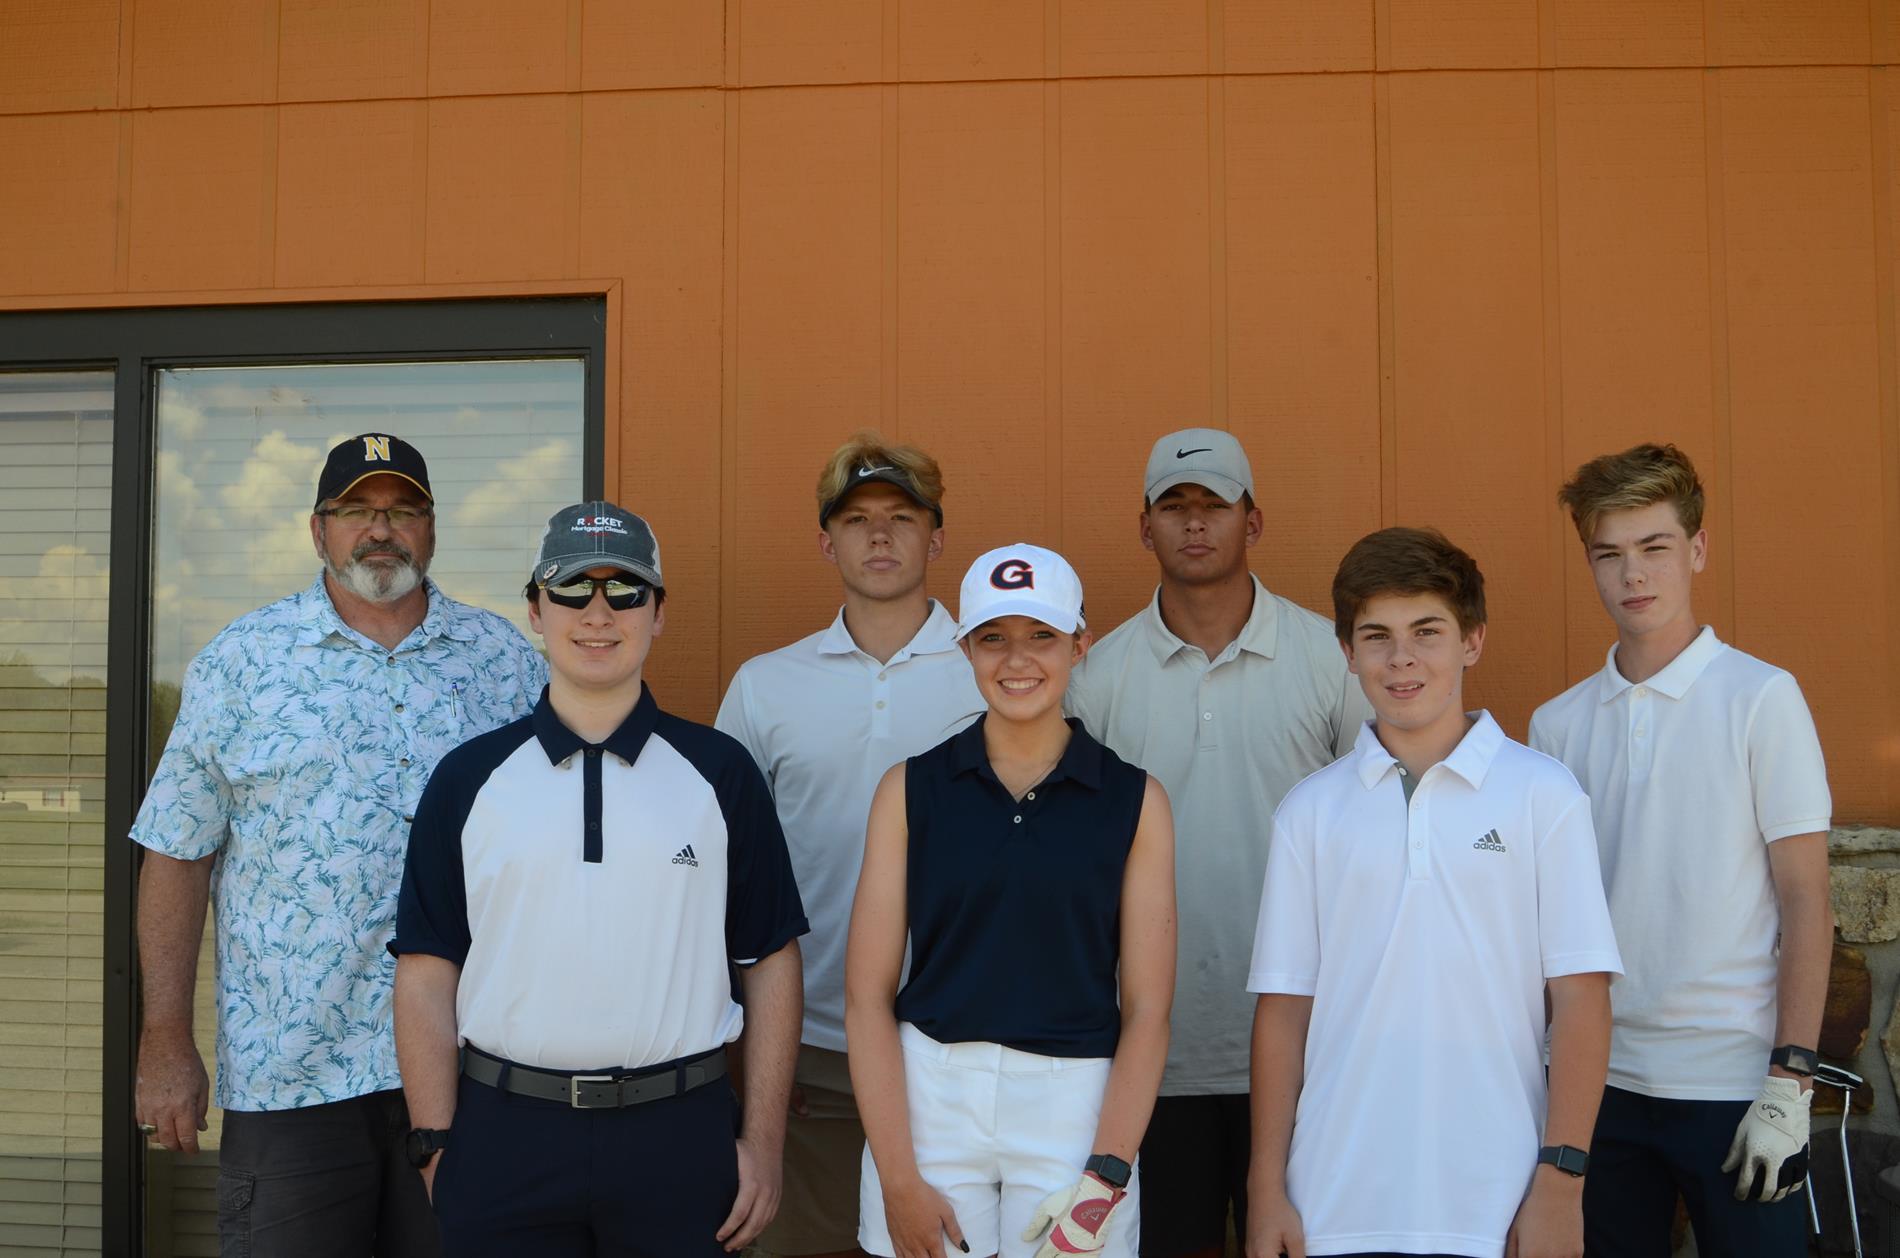 Golf team photo